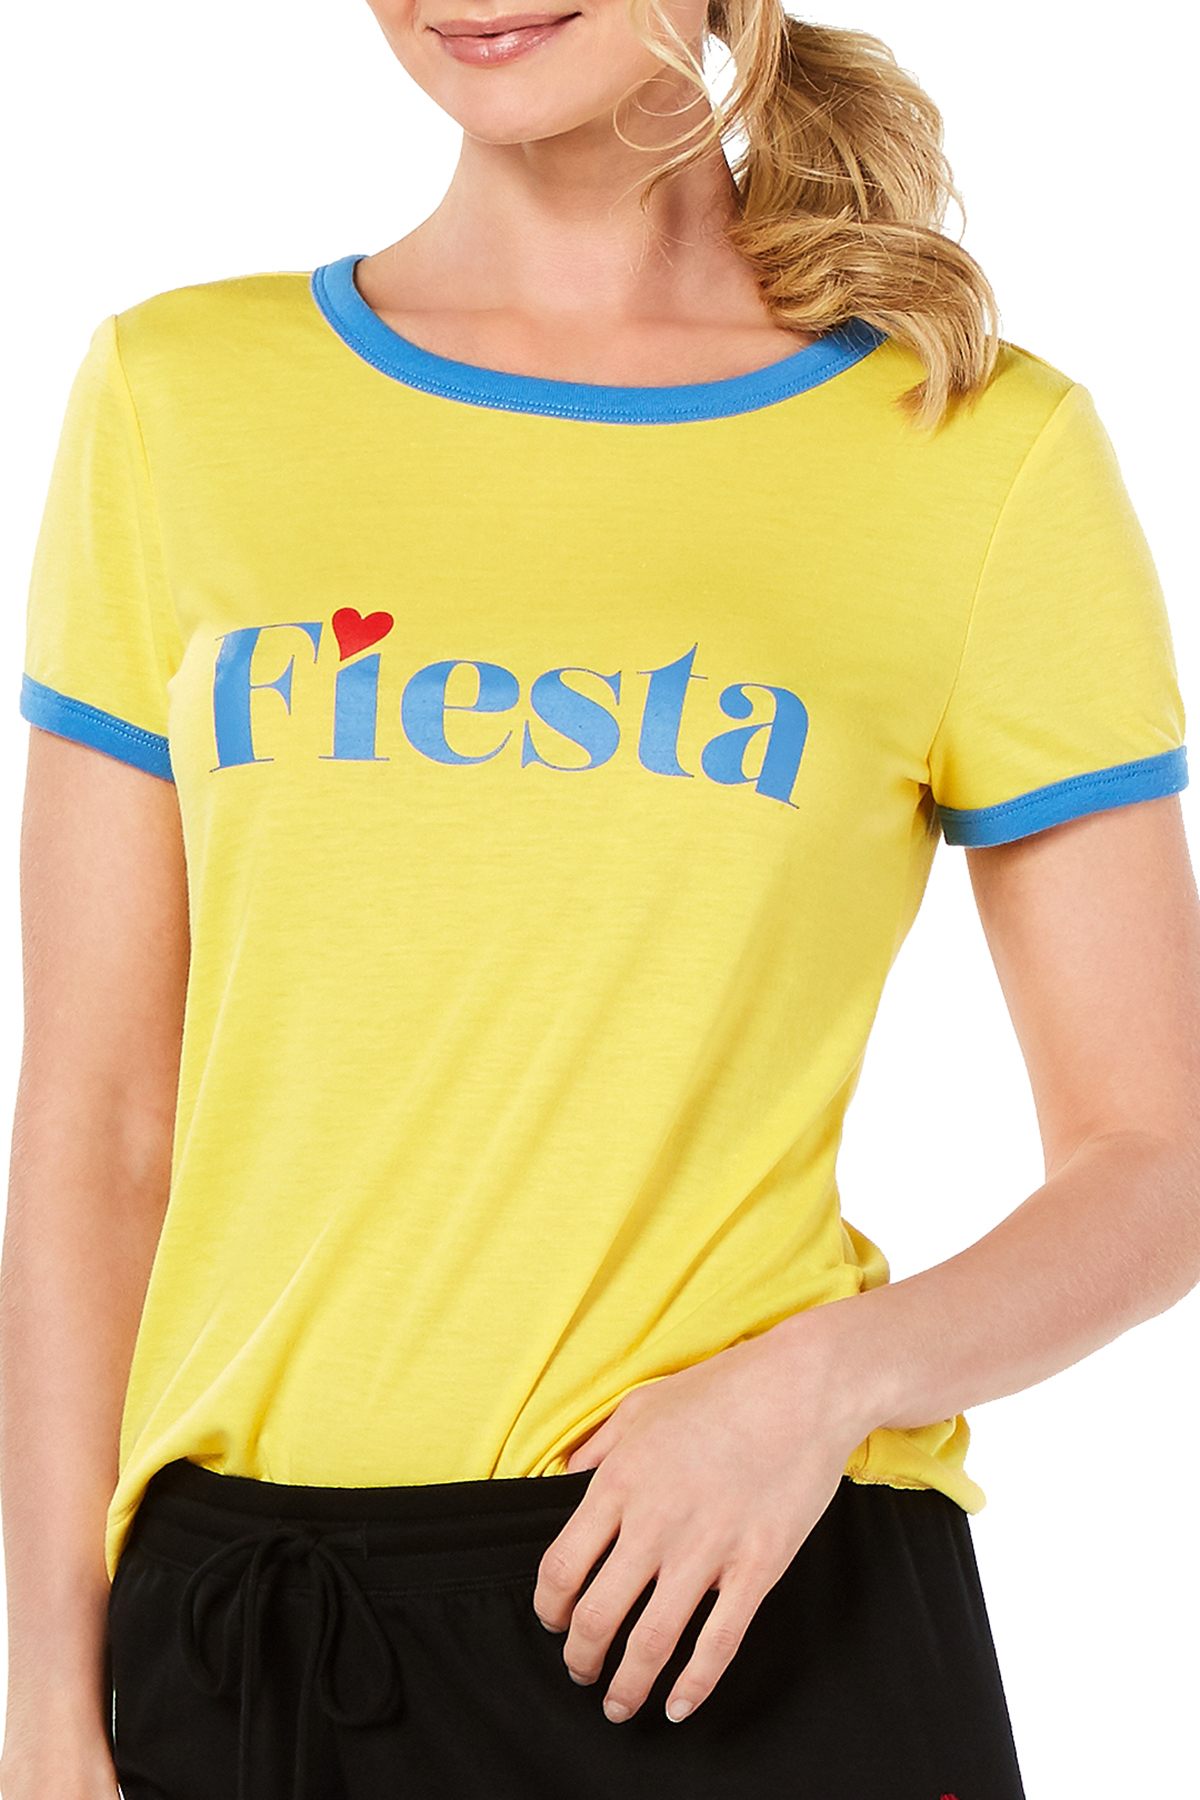 Jenni Ringer T-Shirt in Fiesta Yellow